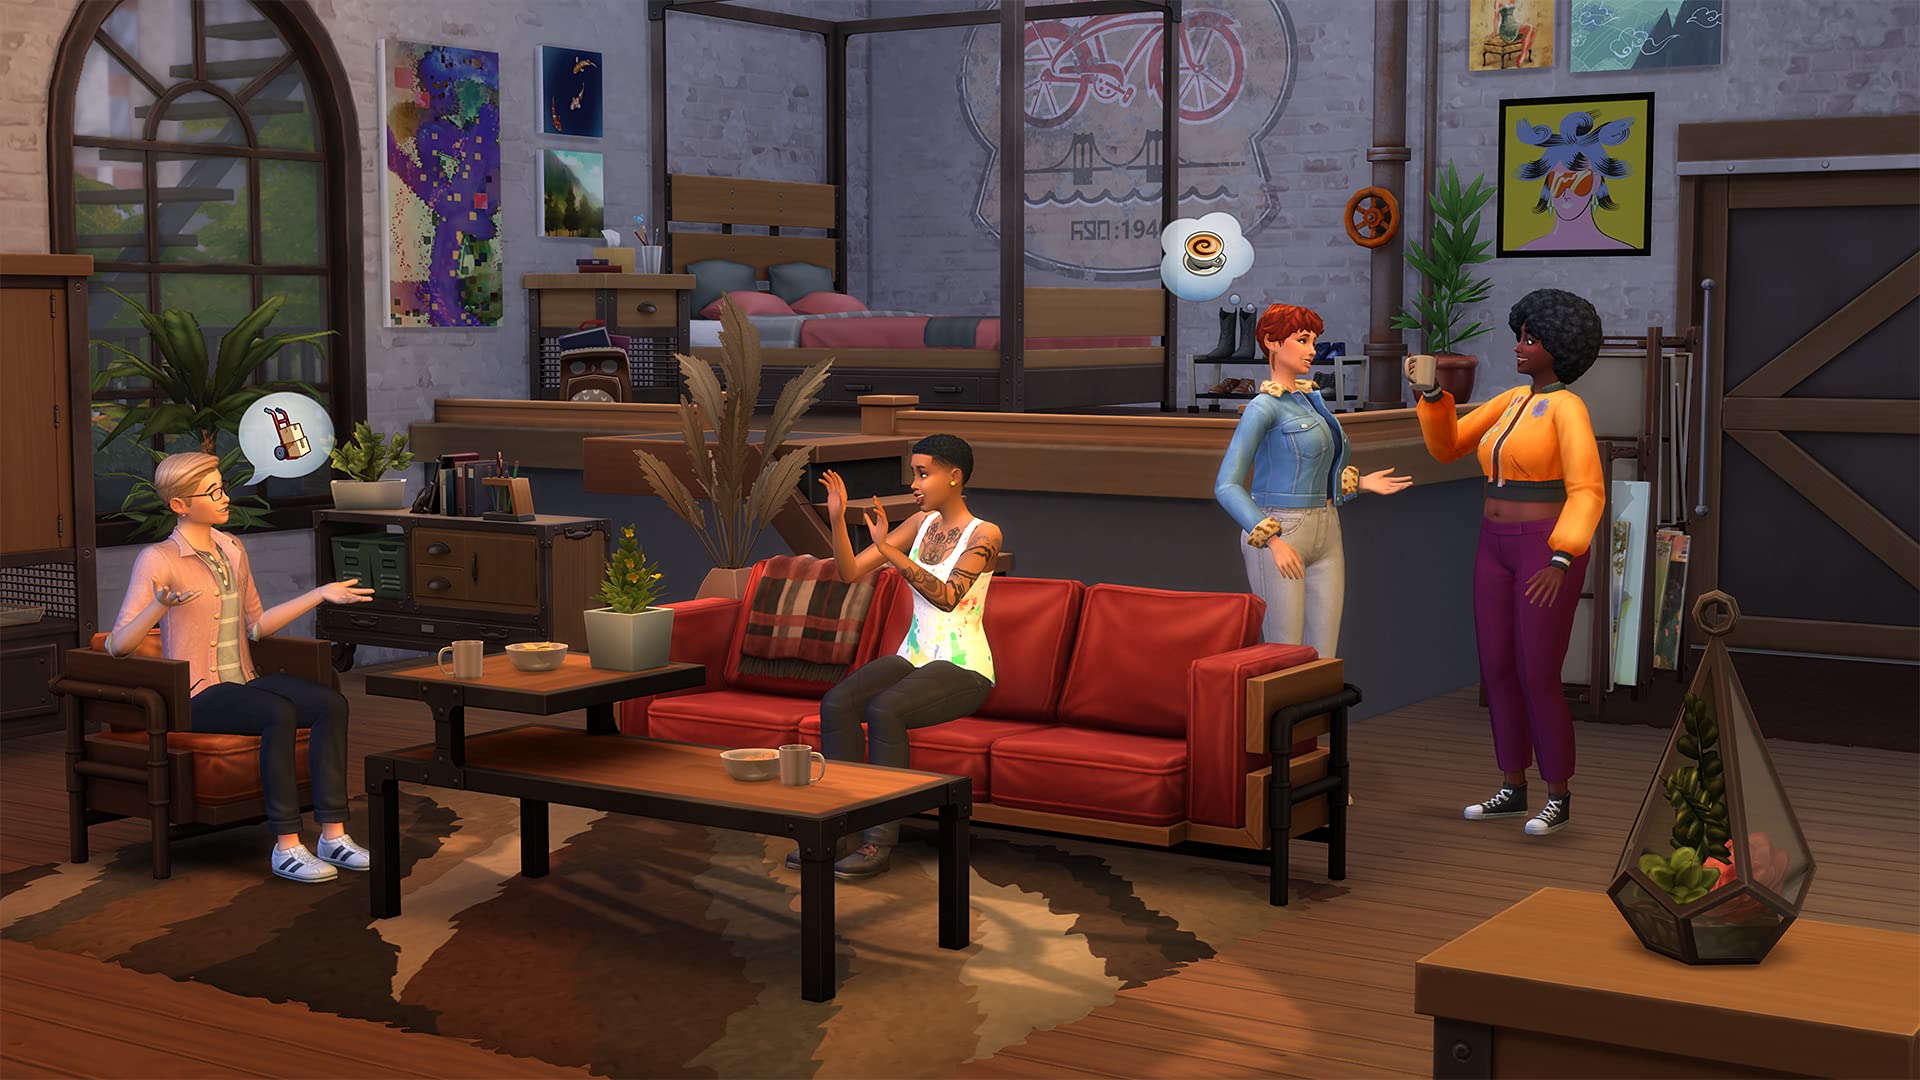 The Sims 4 - Industrial Loft Kit - Origin PC [Online Game Code]